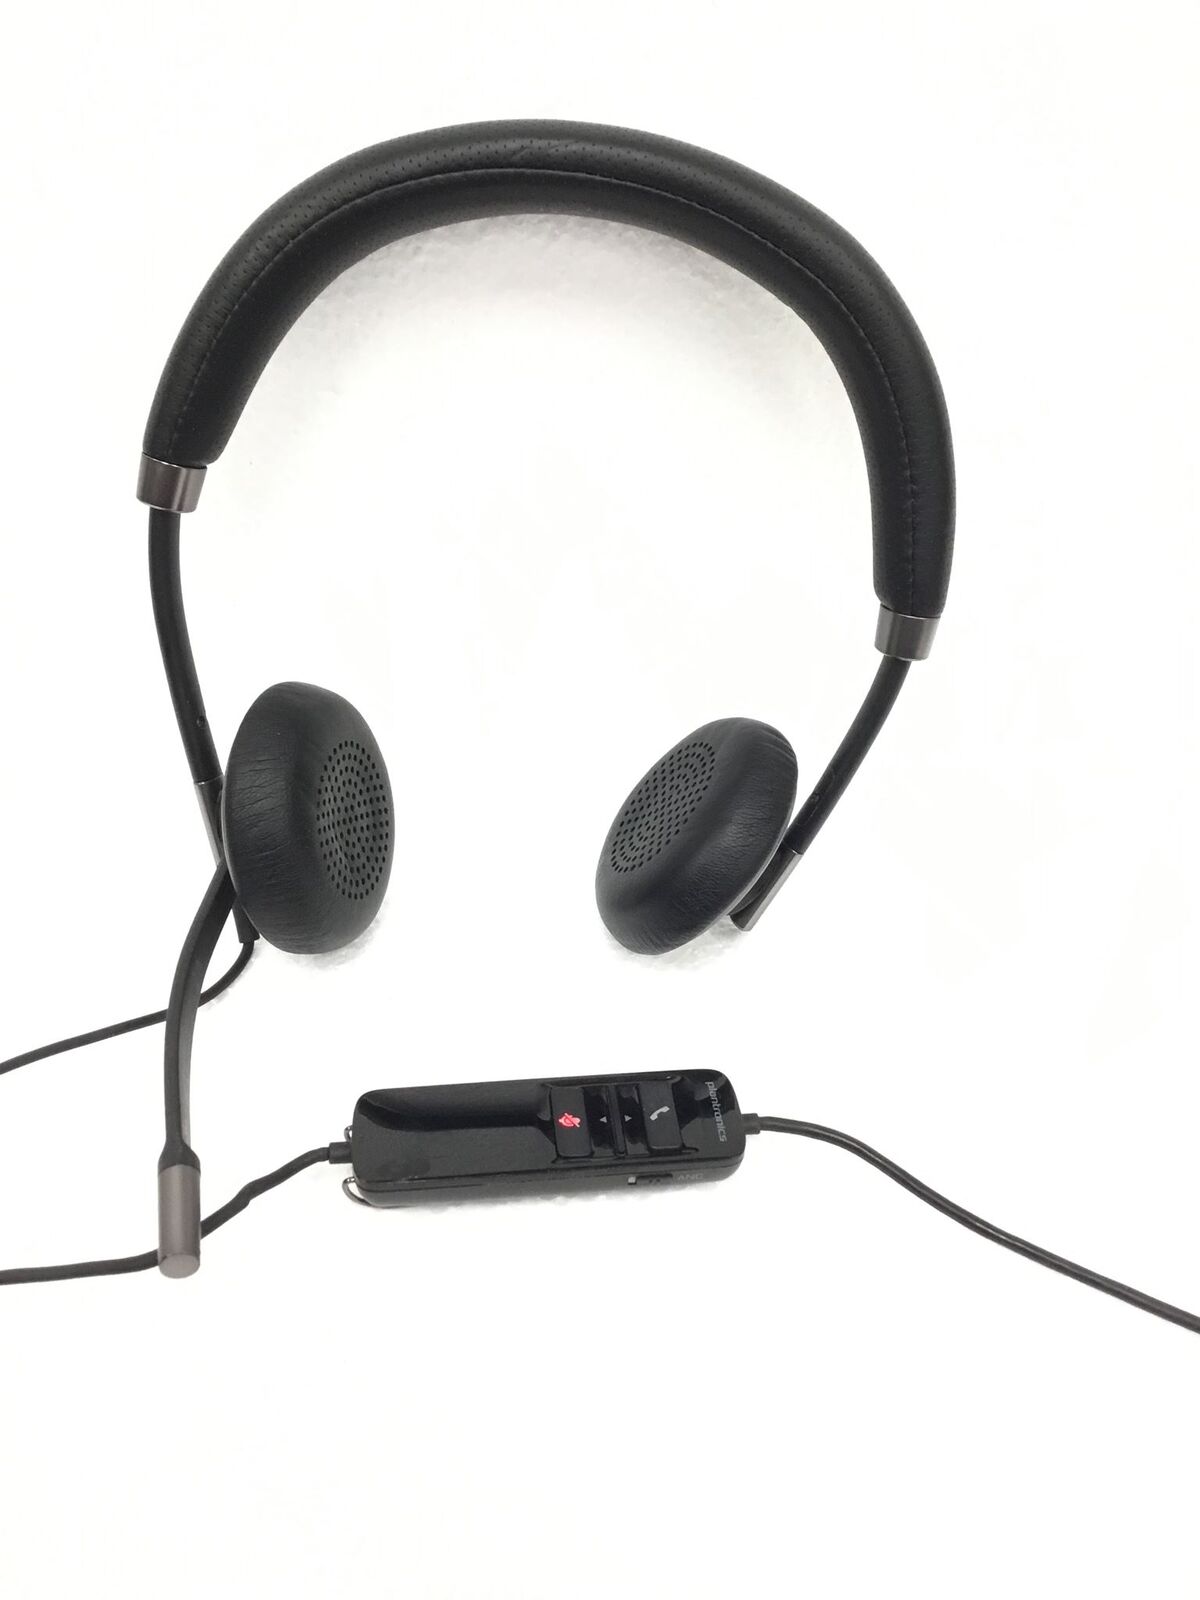 Plantronics Blackwire C725 Stereo USB Wideband ANC Headband Computer Headset